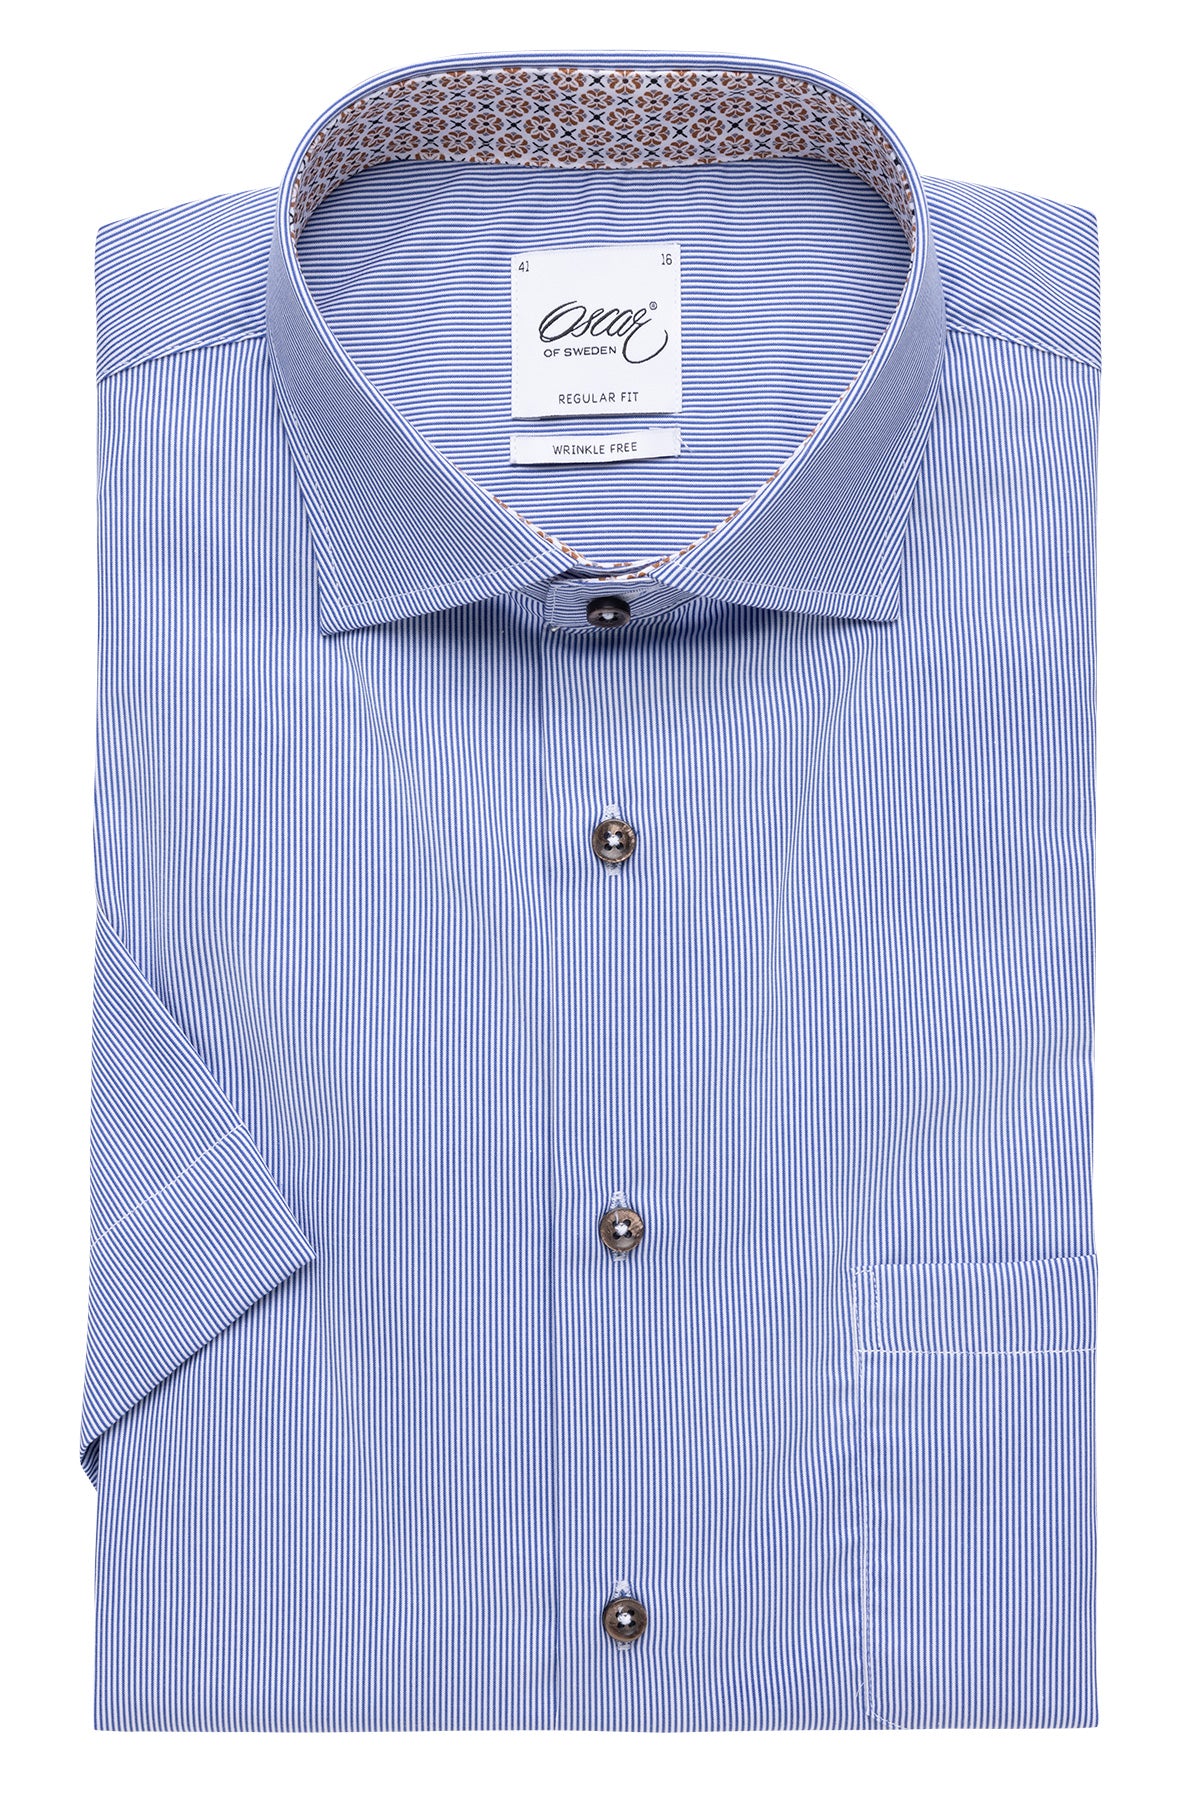 Blue short sleeve regular fit shirt with contrast details